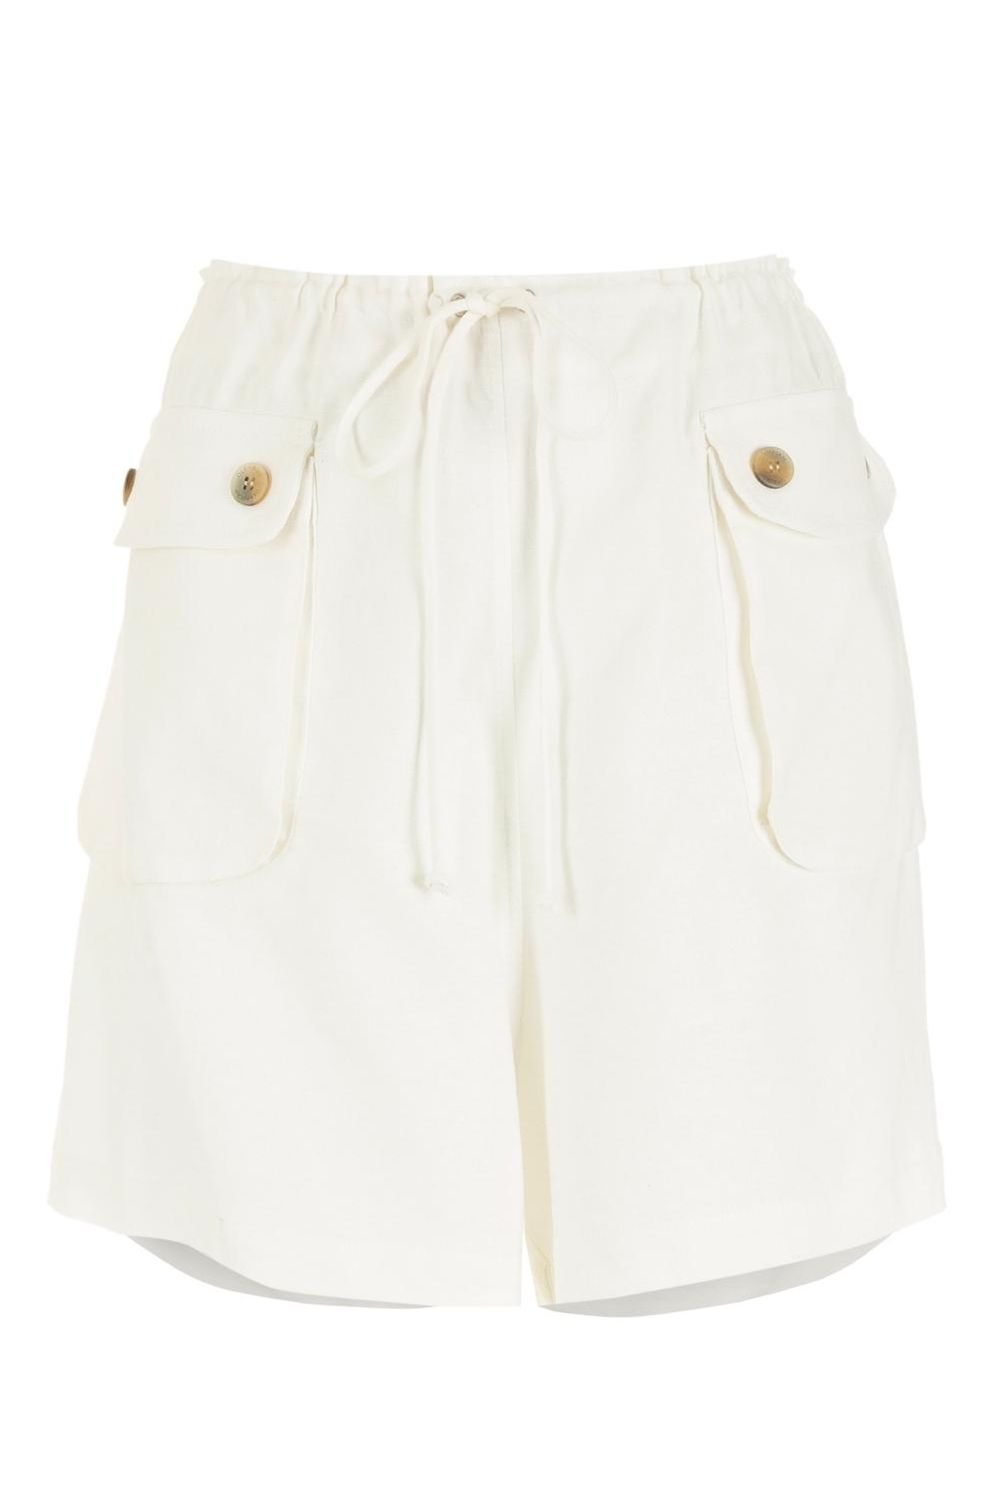 shorts-linen-off-white-still